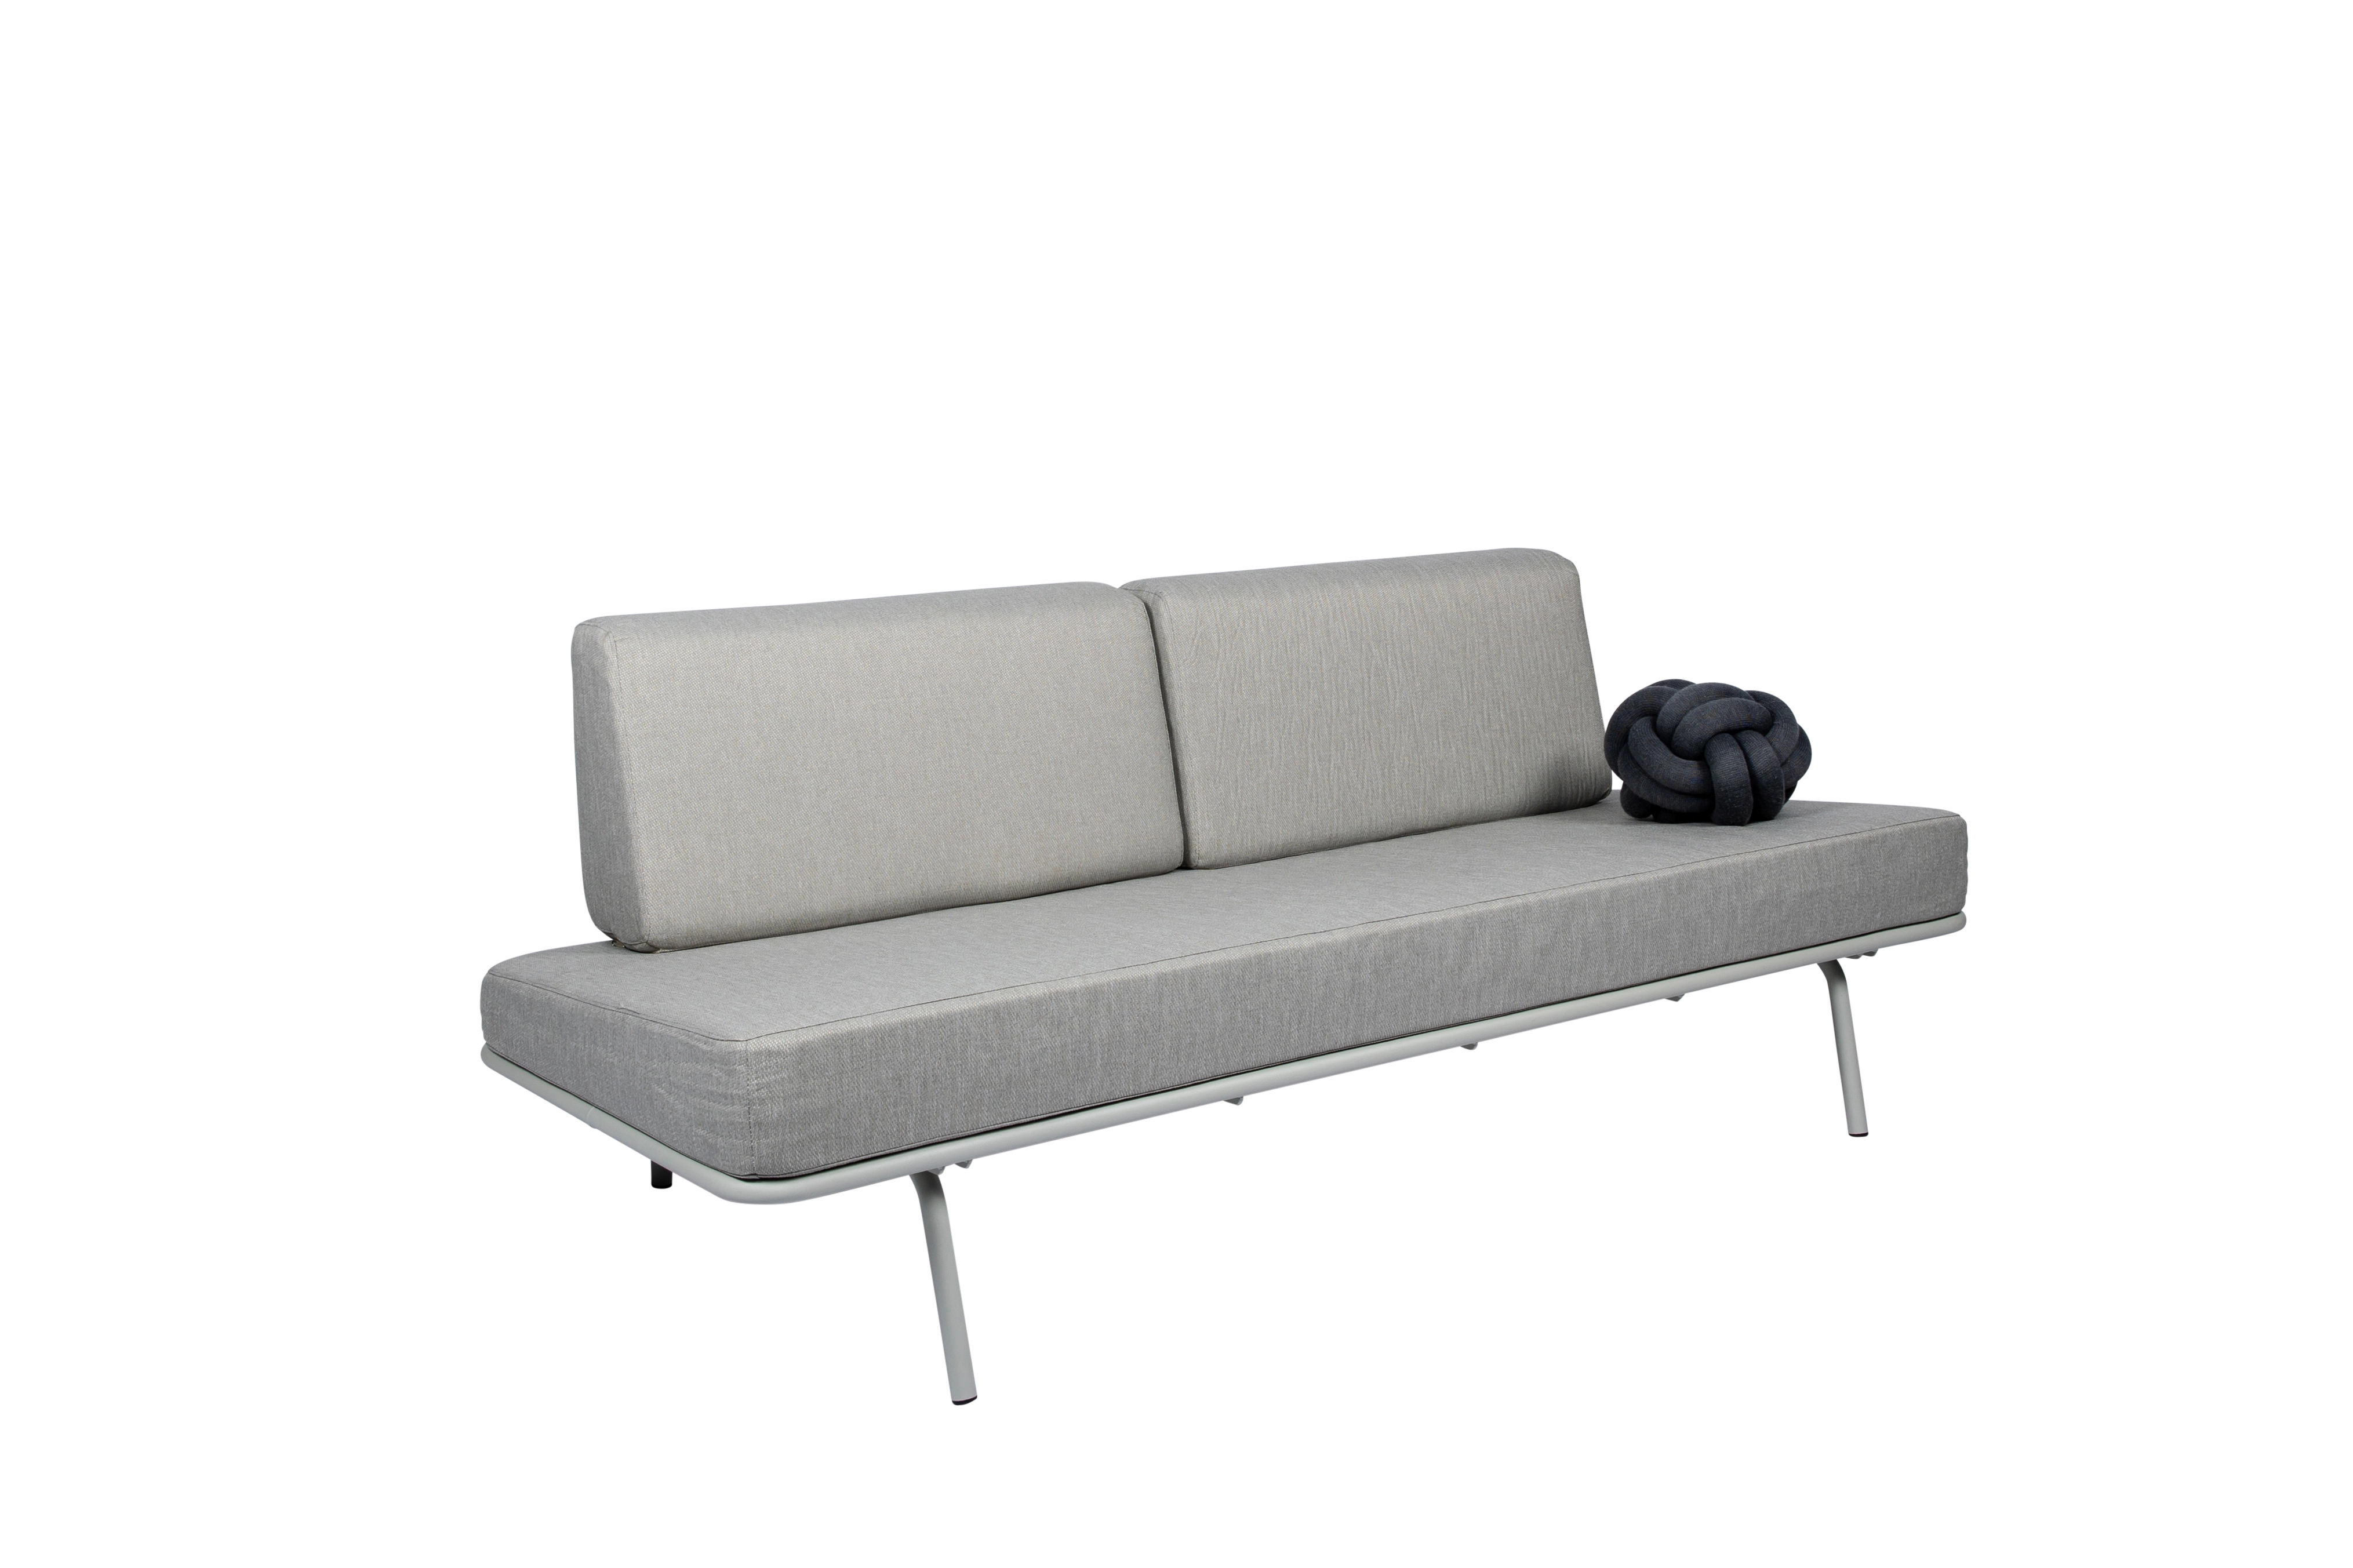 Weltevree-sofabed-komplettes-aussehen-grau